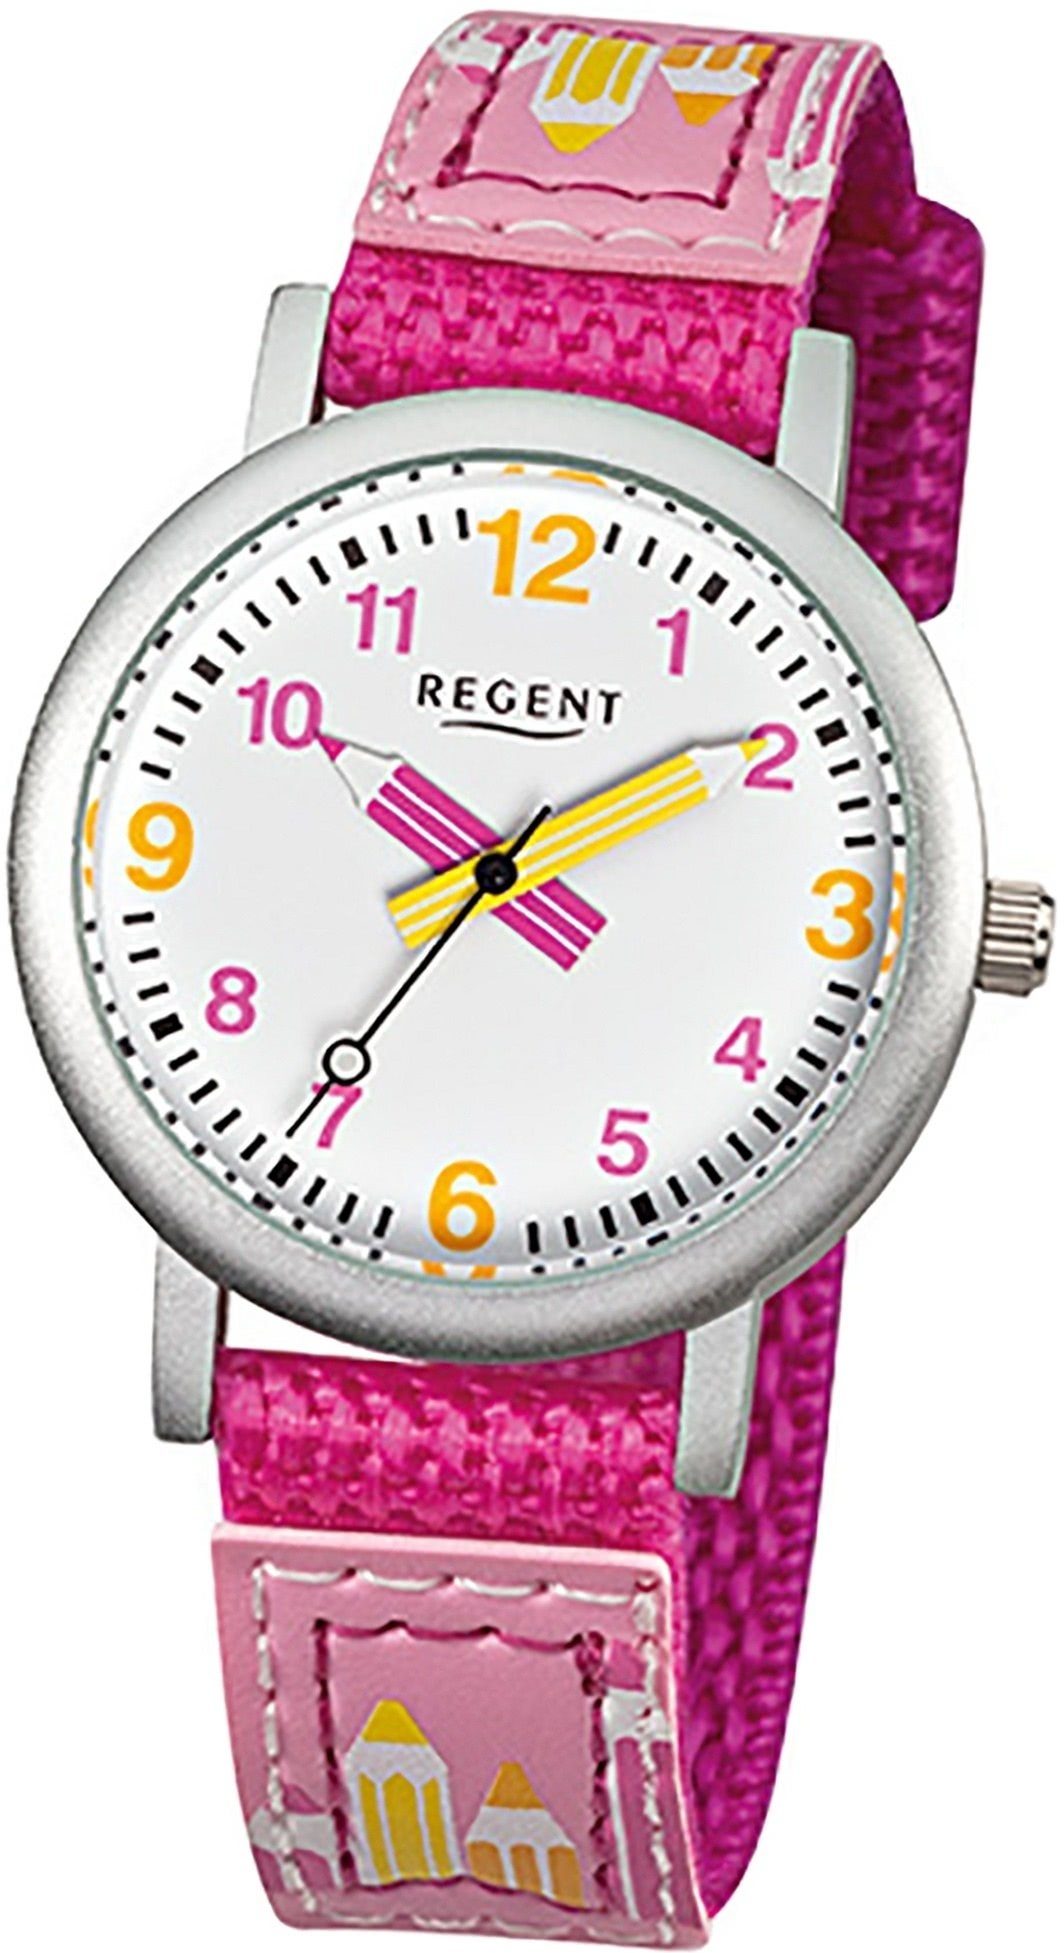 Regent Quarzuhr Regent pink, Uhr Textil Textilarmband klein (ca. Kinderuhr Kinder 29mm) rundes Gehäuse, Quarzuhr